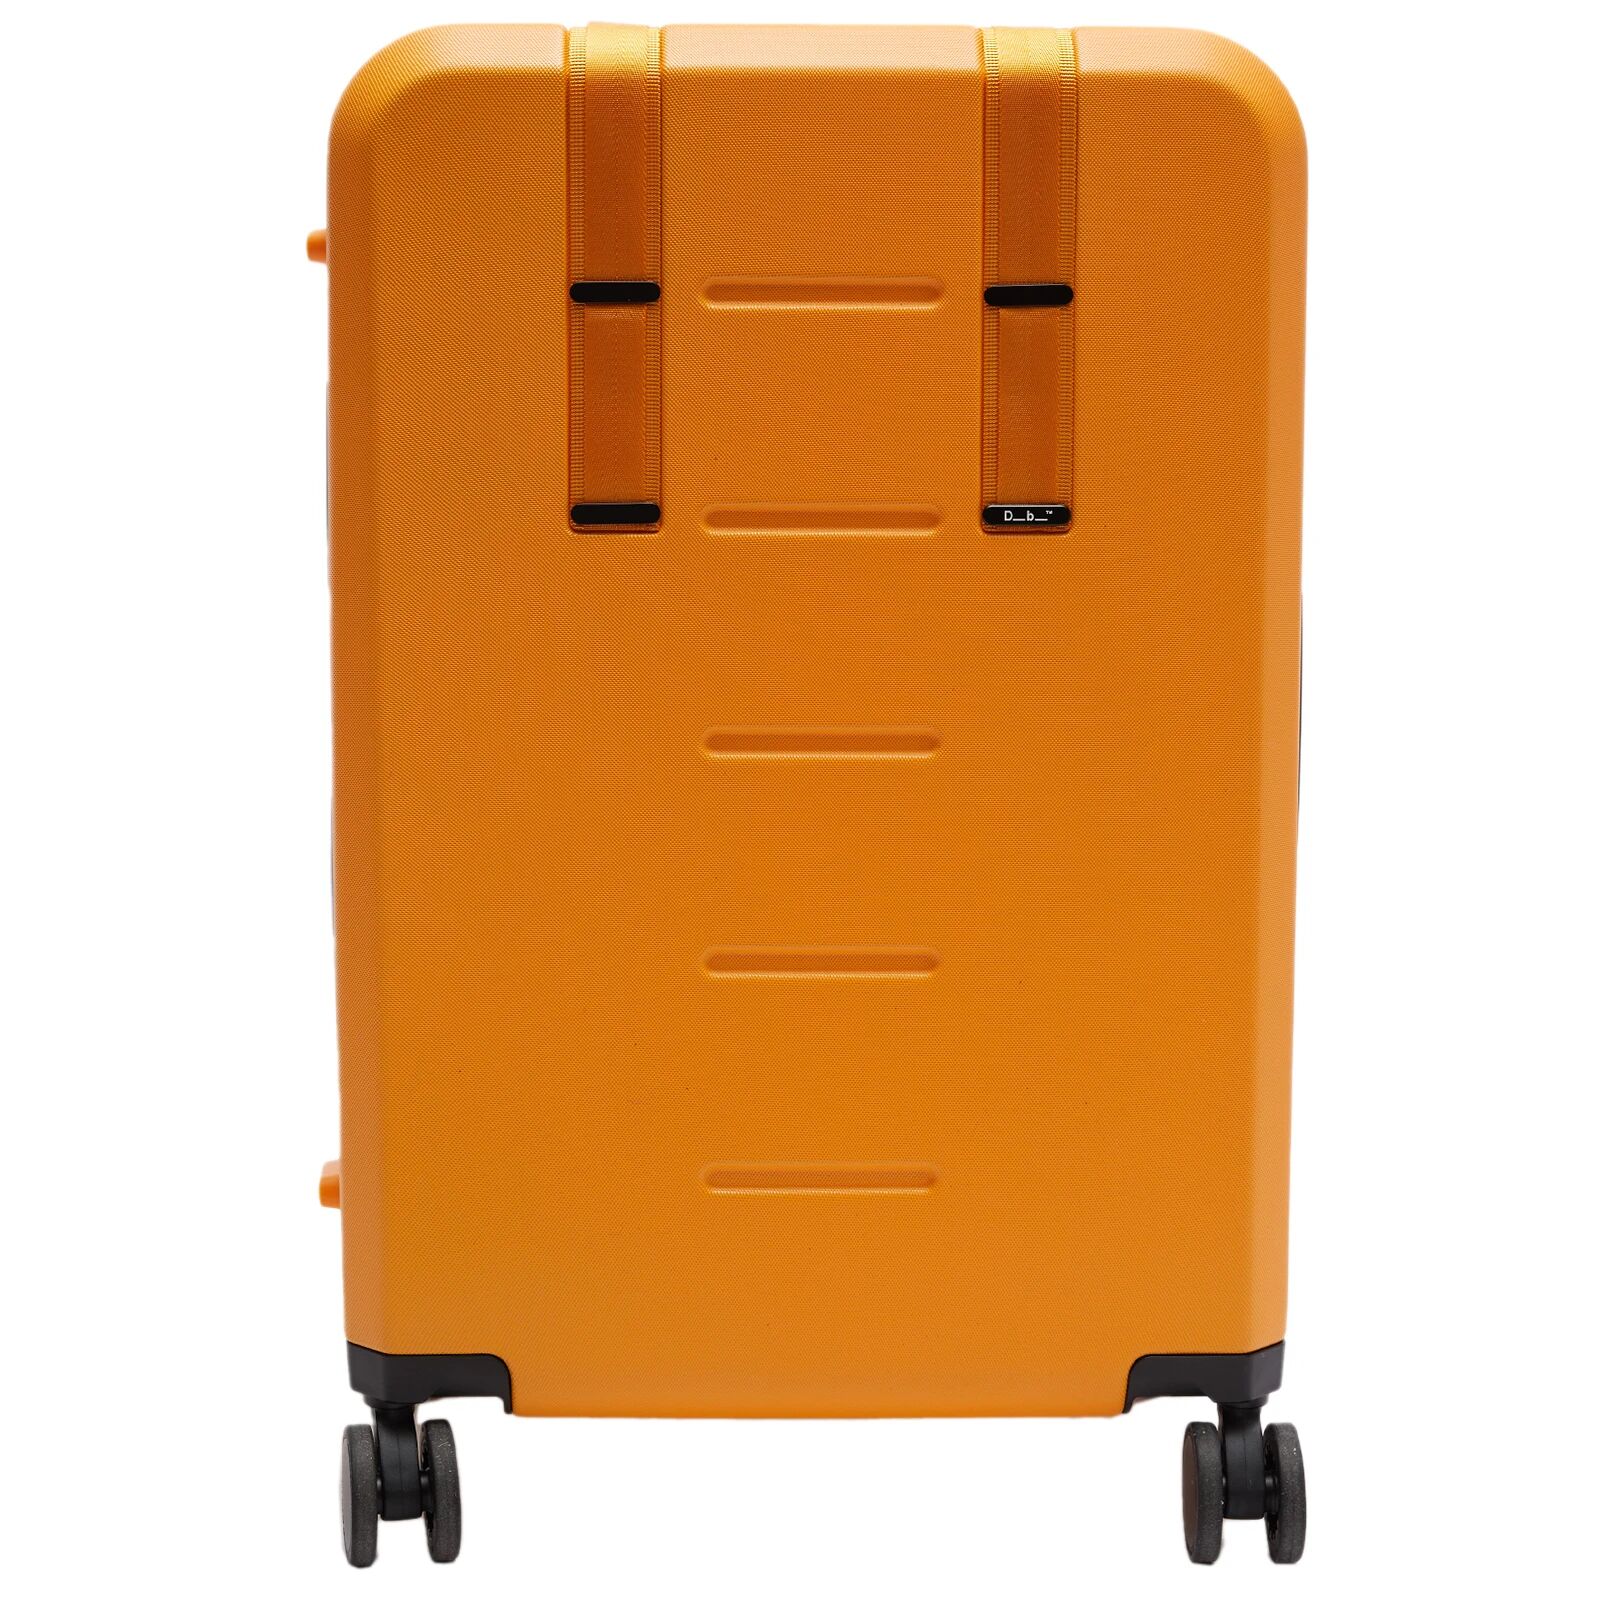 Db Journey Ramverk Check-In Luggage - Medium in Parhelion Orange